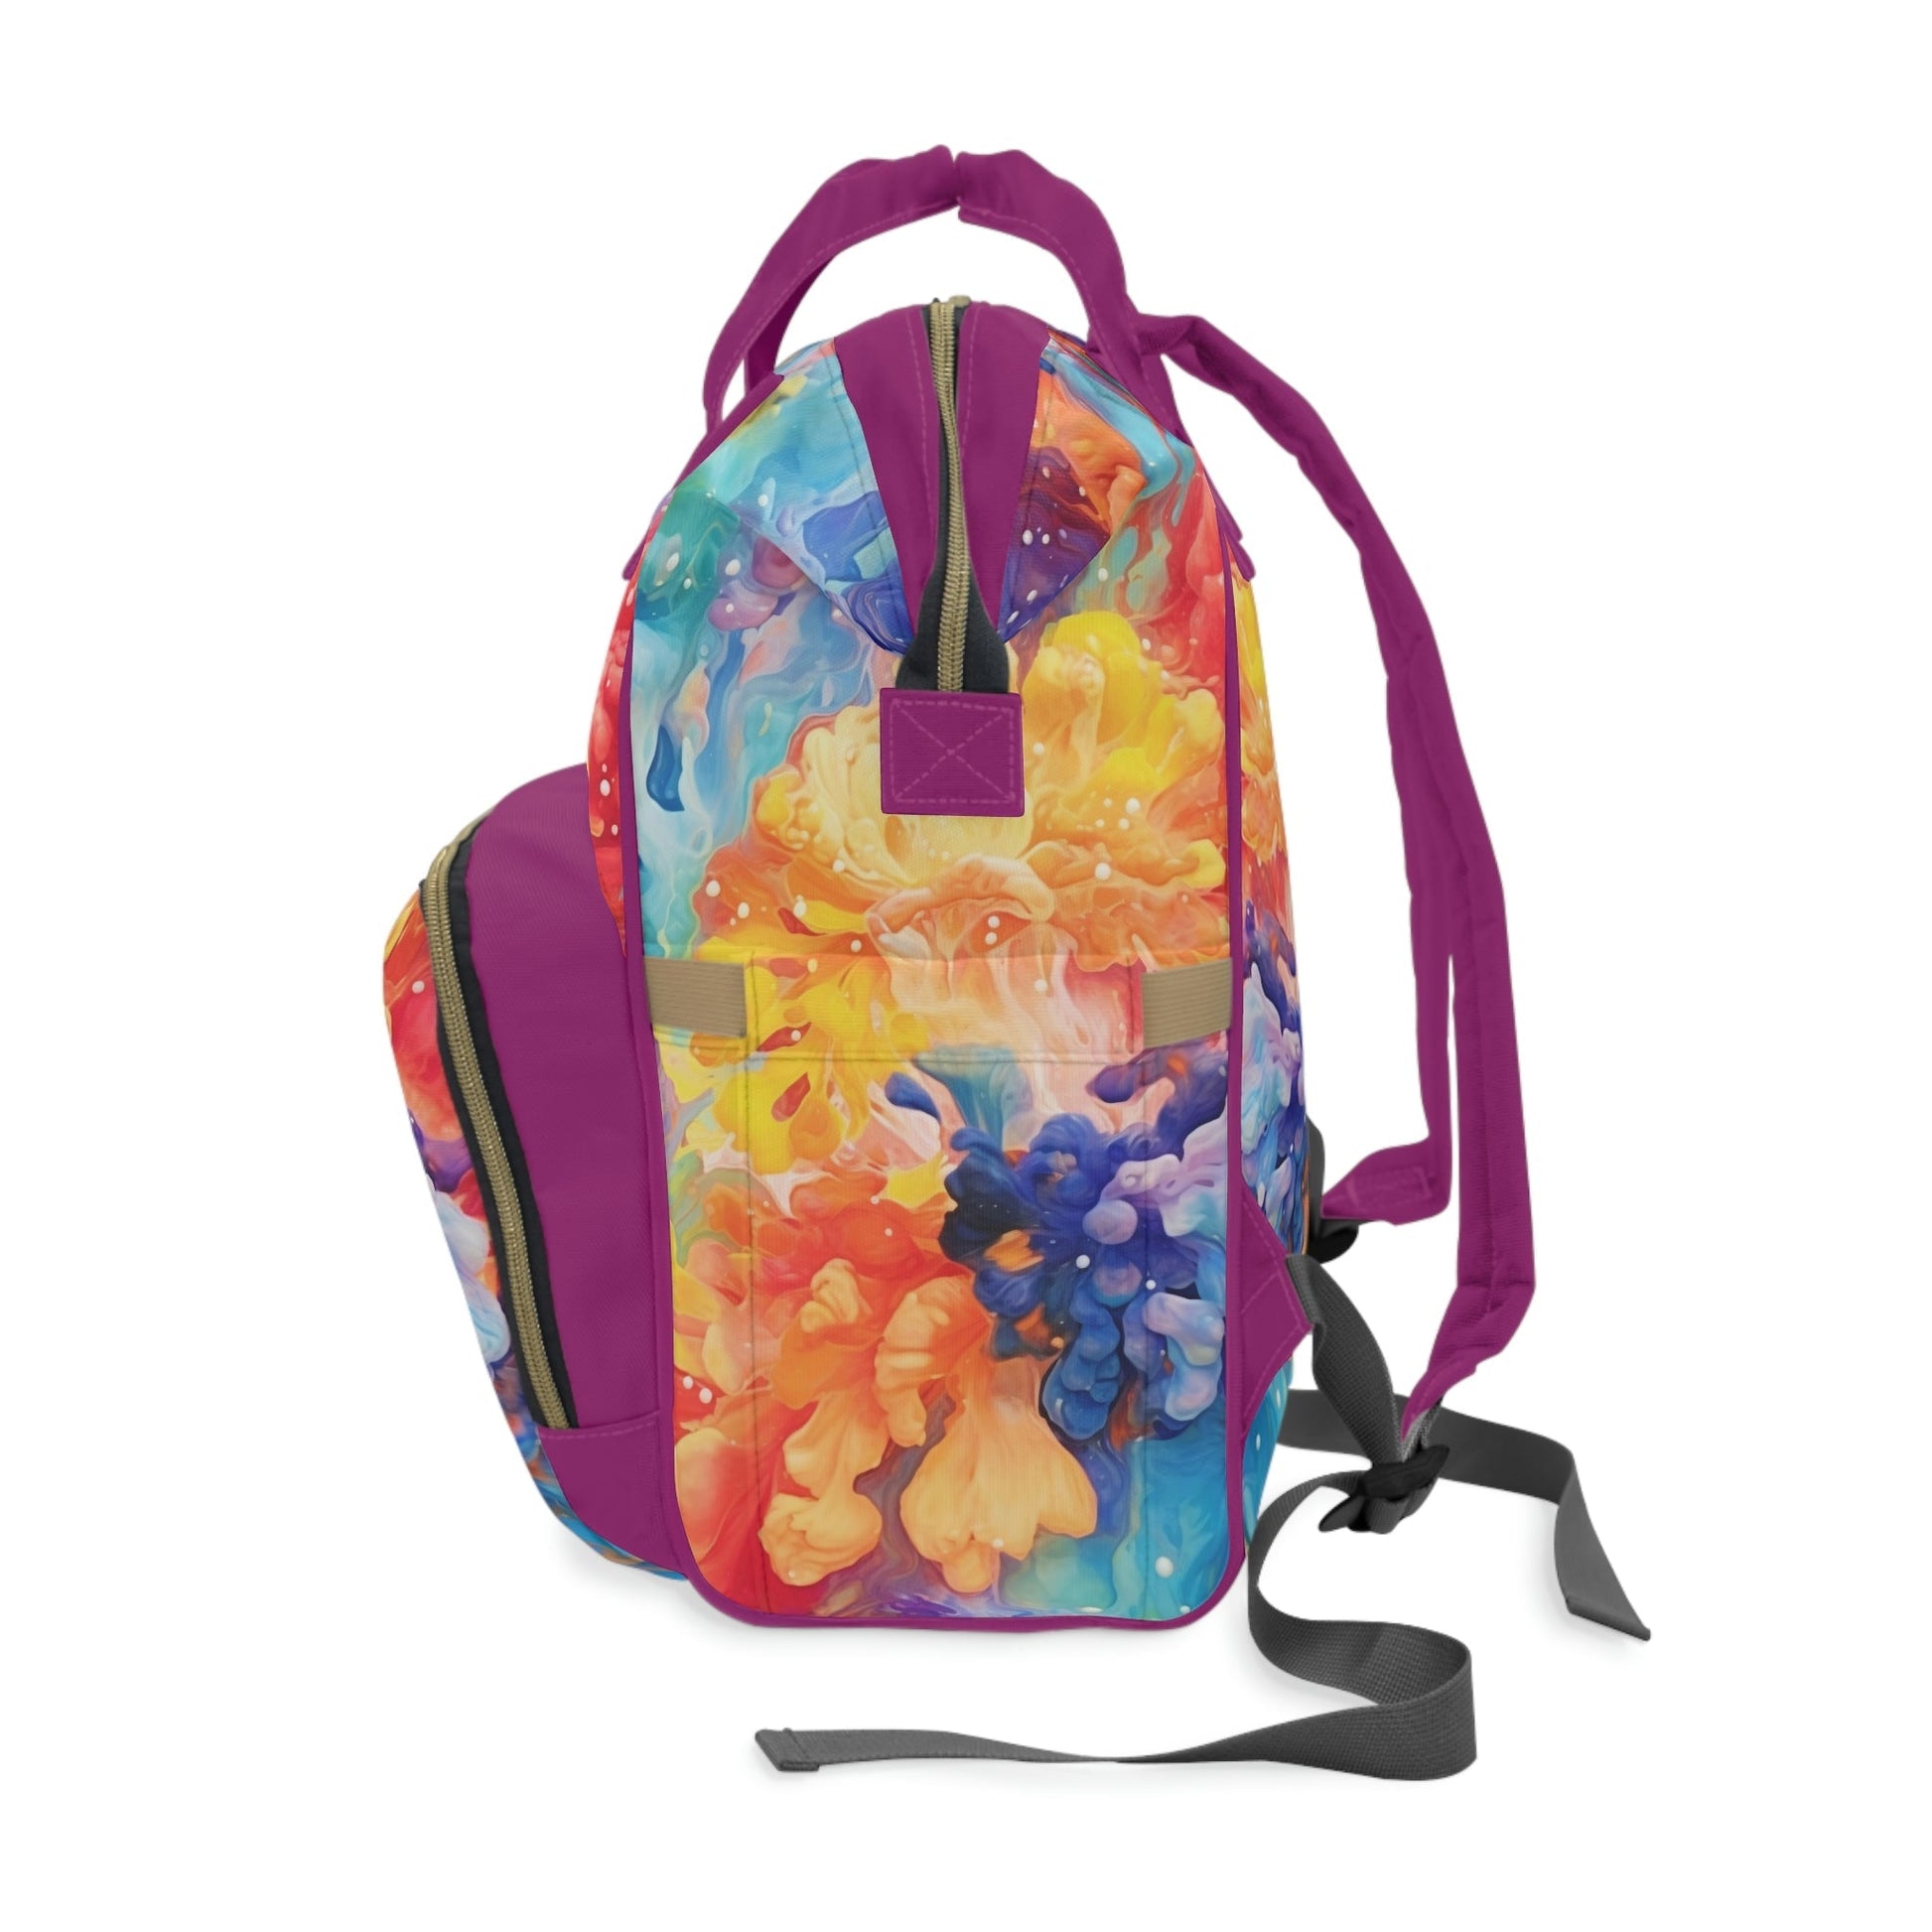 Backpack Bag in Neon Billows - Modern Kastle Shop